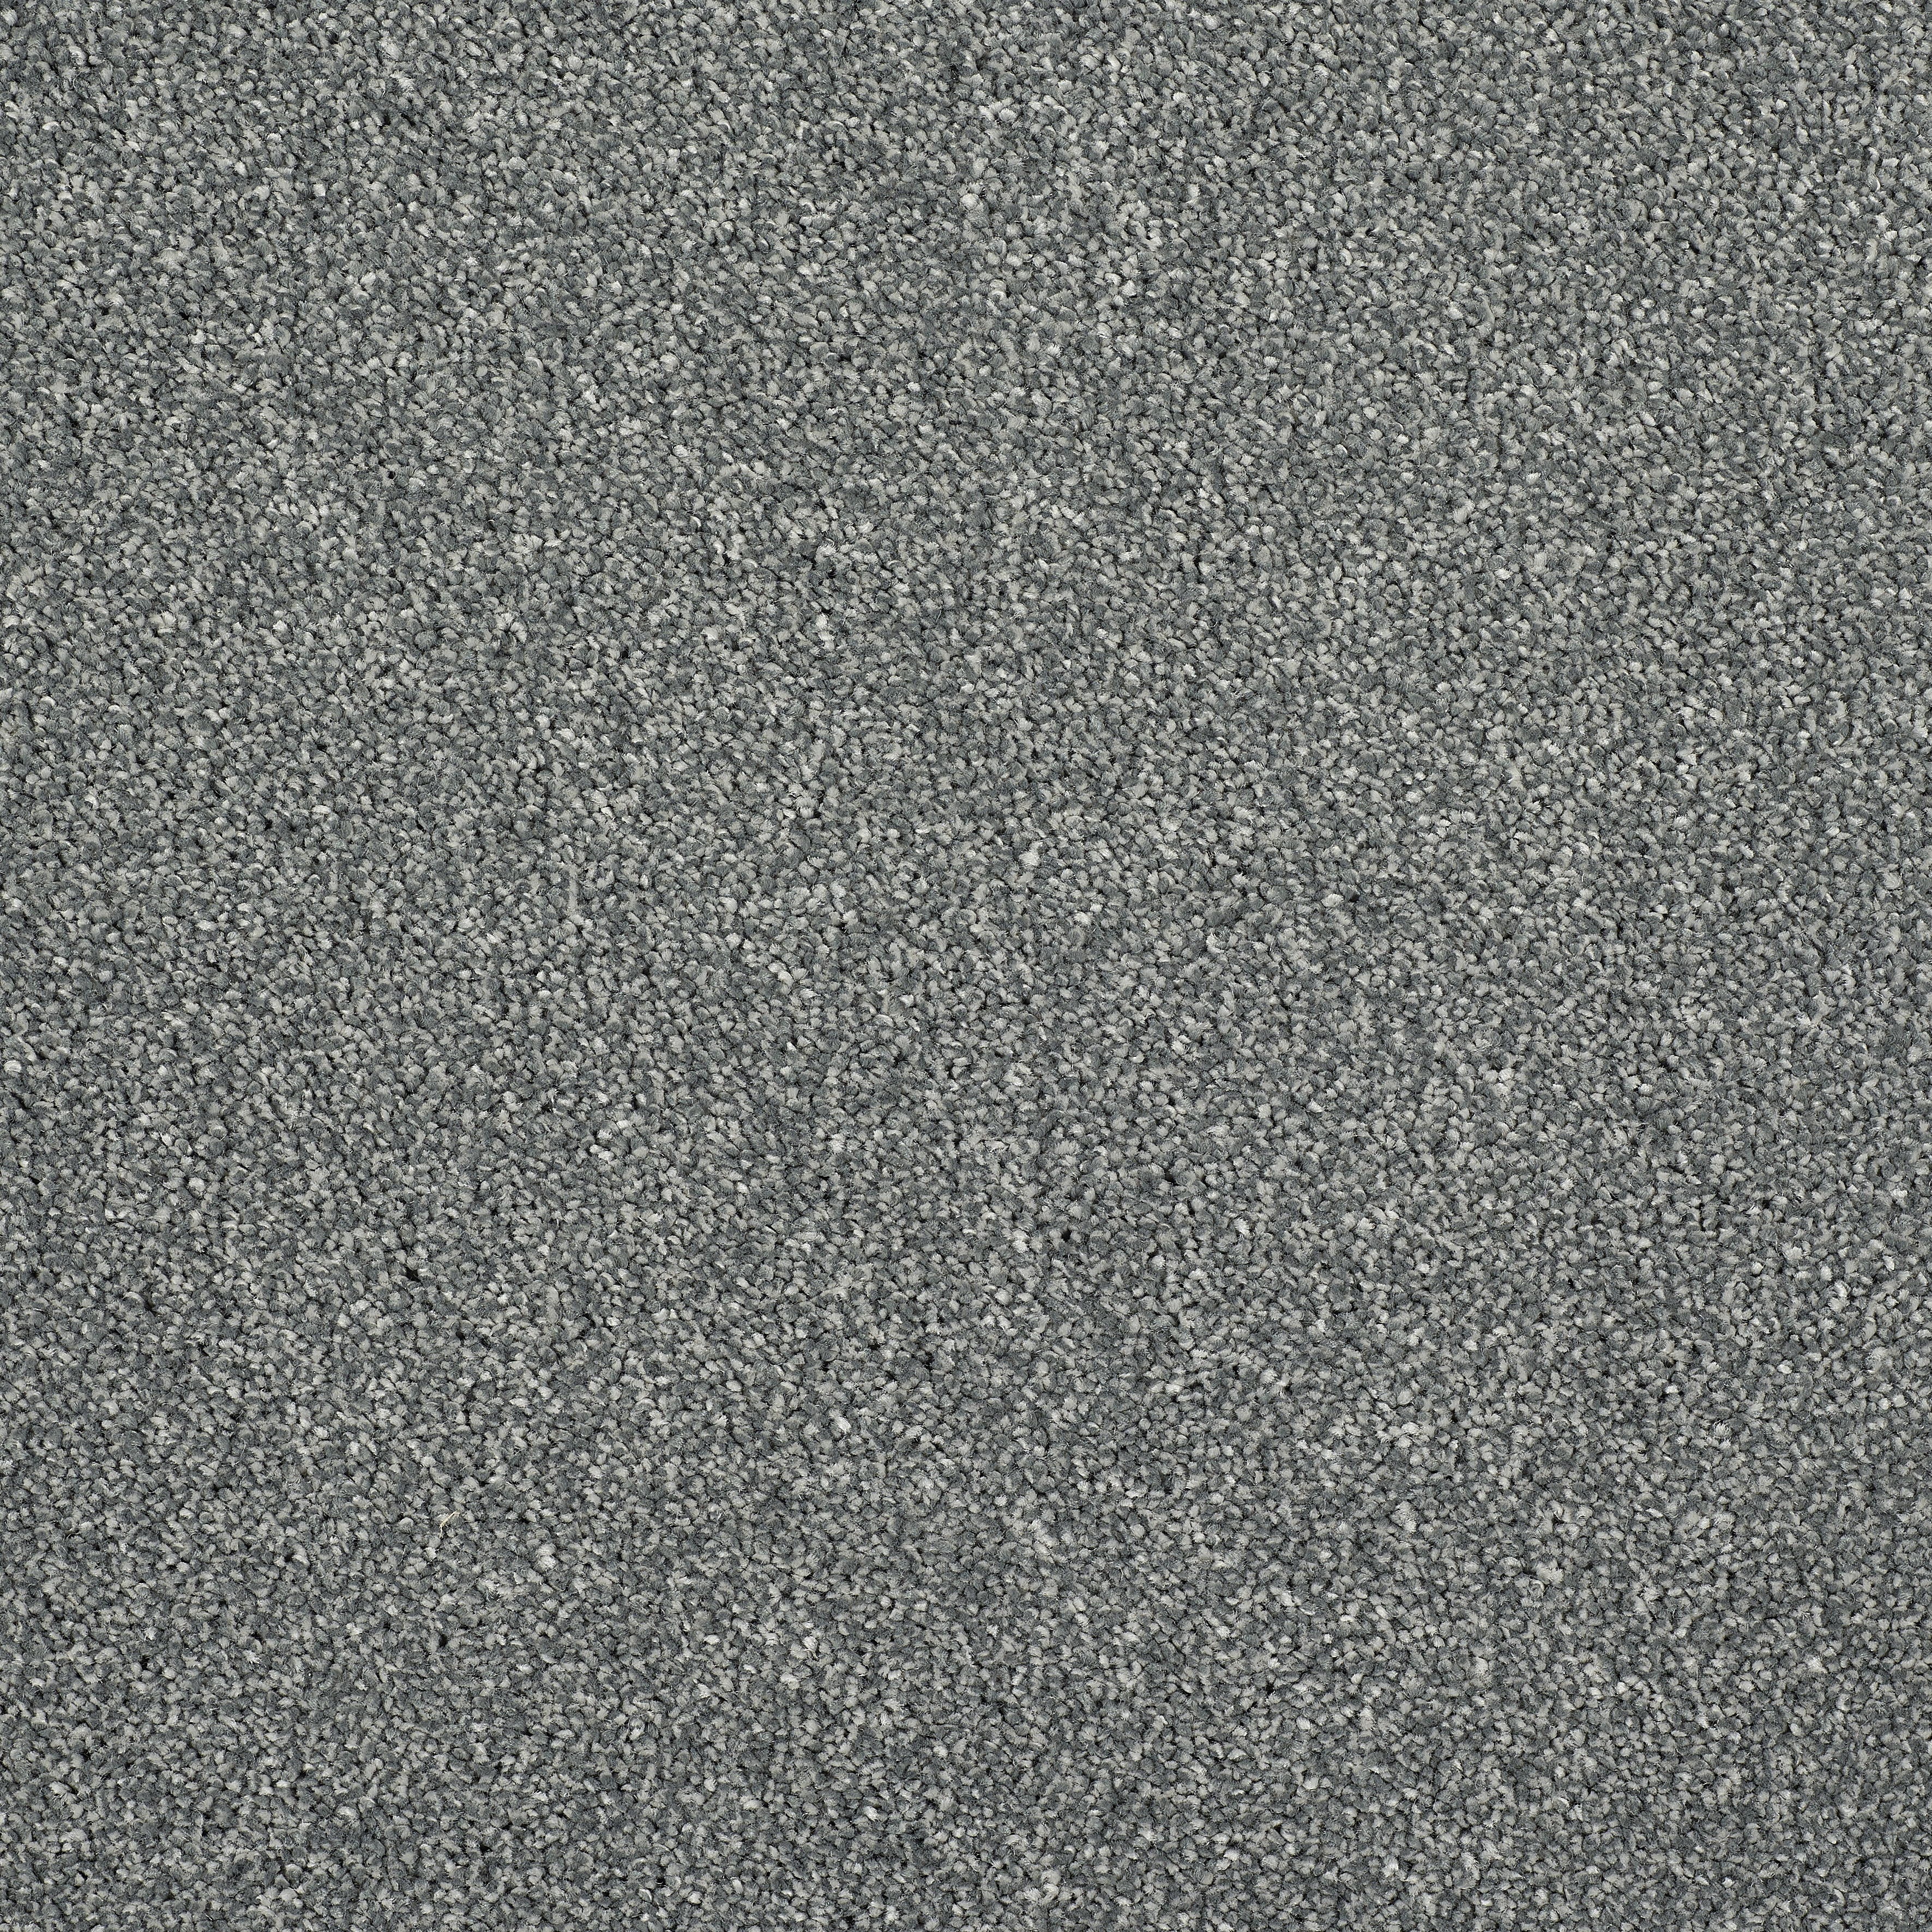 Stainfree Affluence Twist Carpet - 03 Granite